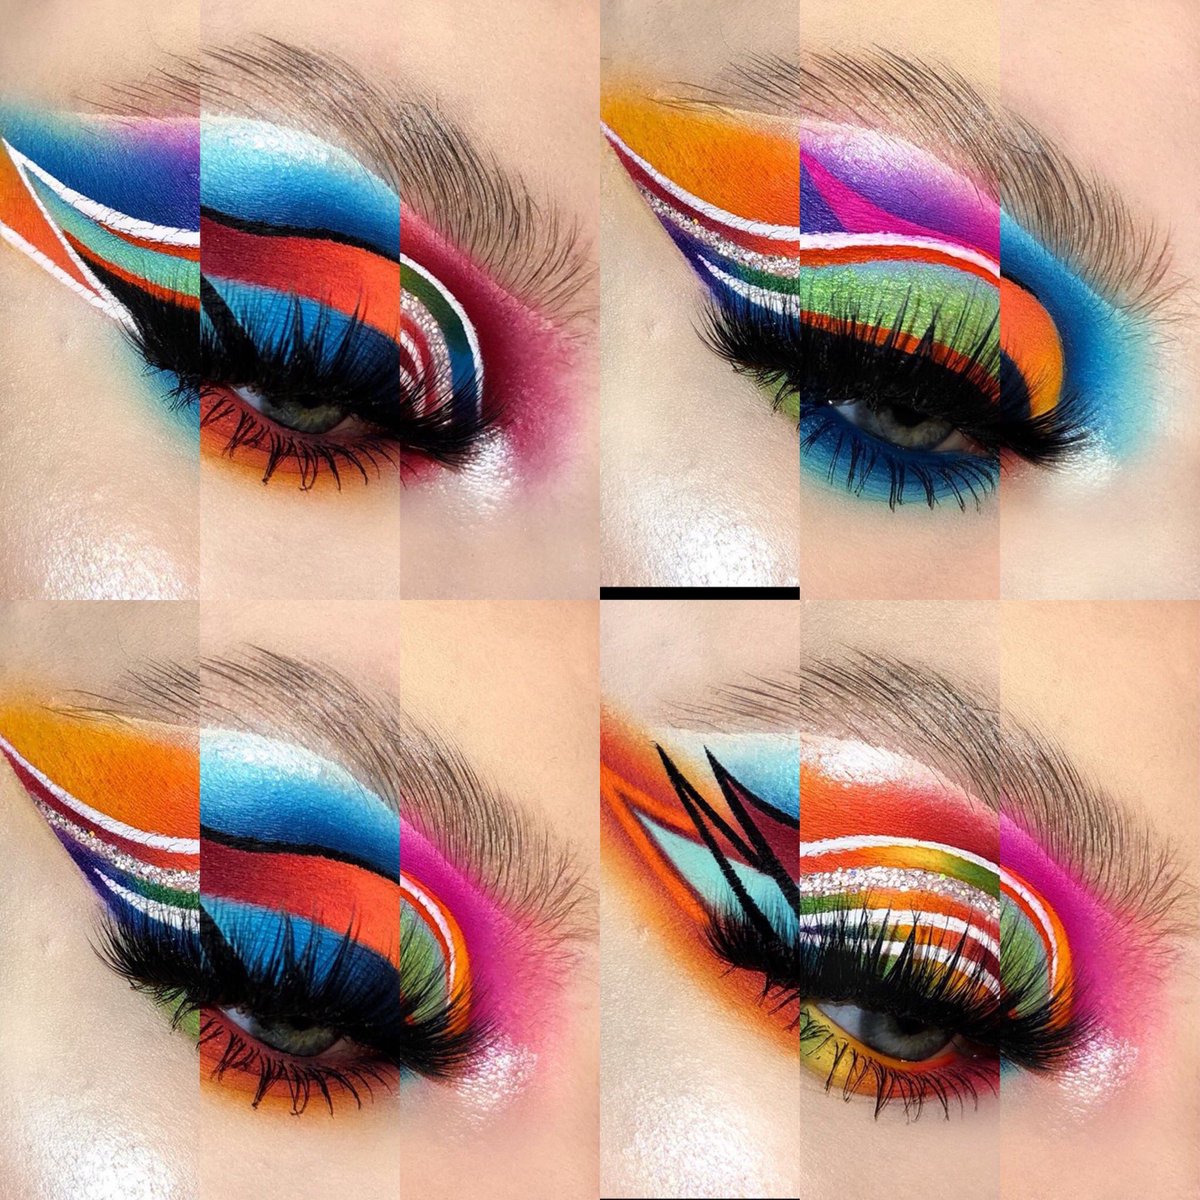 Did some layouts of three looks combined and this honestly looks like a masterpiece😫🥺

#makeupartist #muadiscover #makeuptutorial #jeffreestarprlist #abhlist #norvina #morpheglamfam